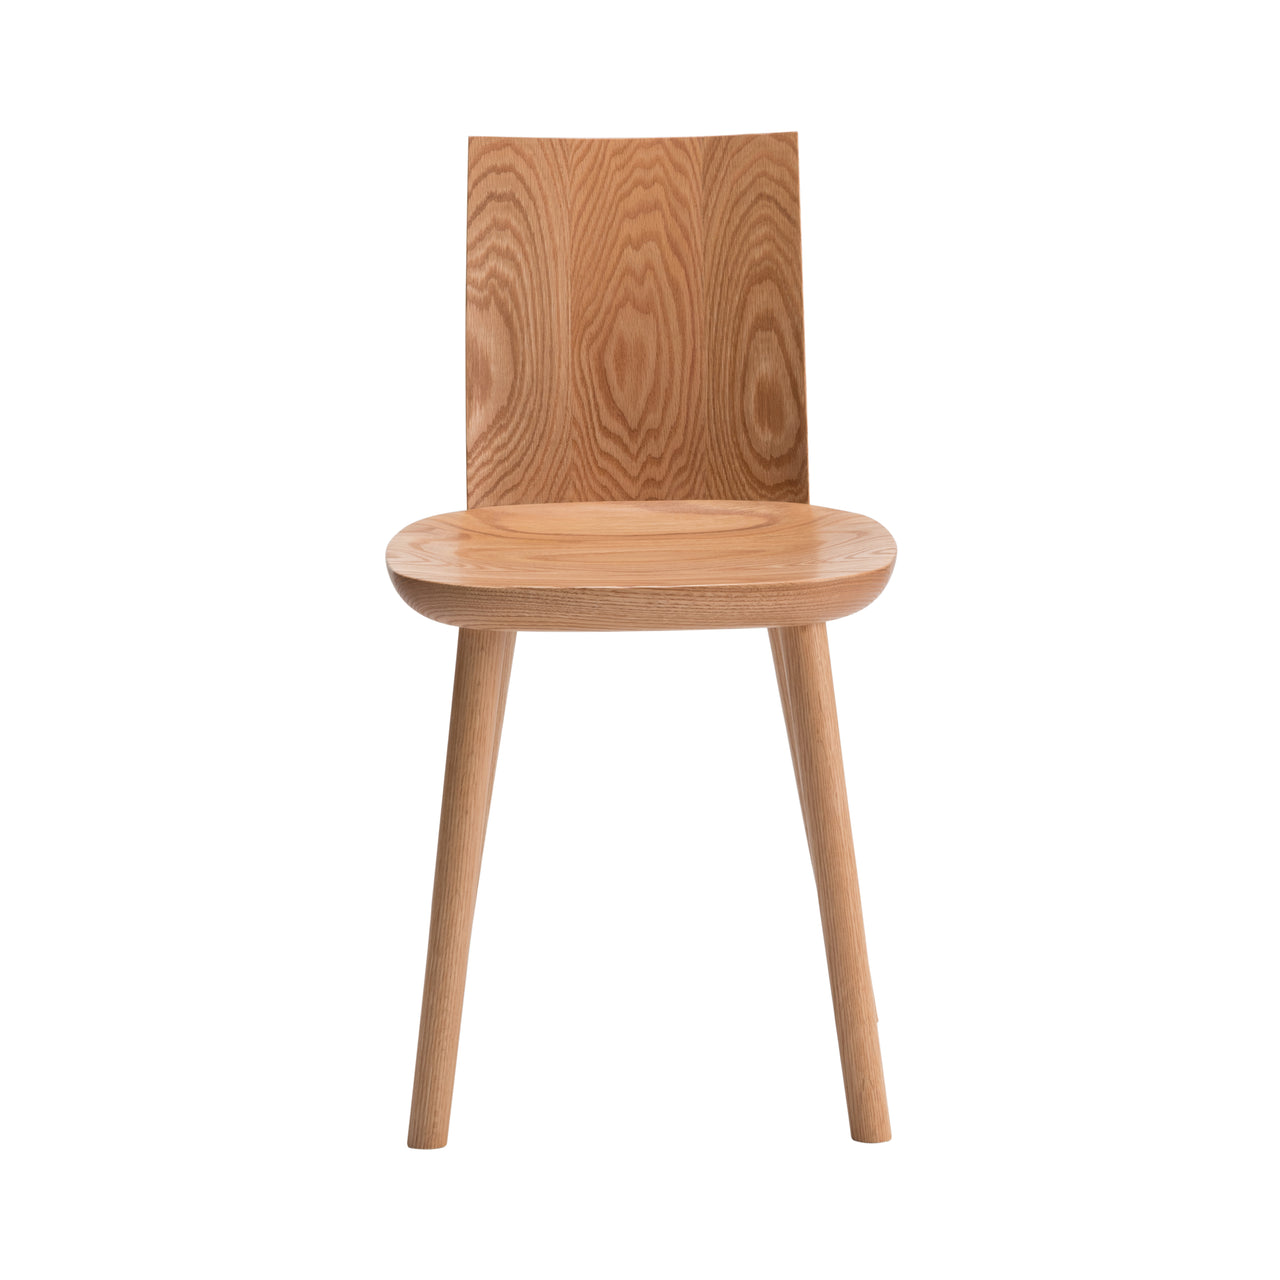 Blest Chair: Natural Oak